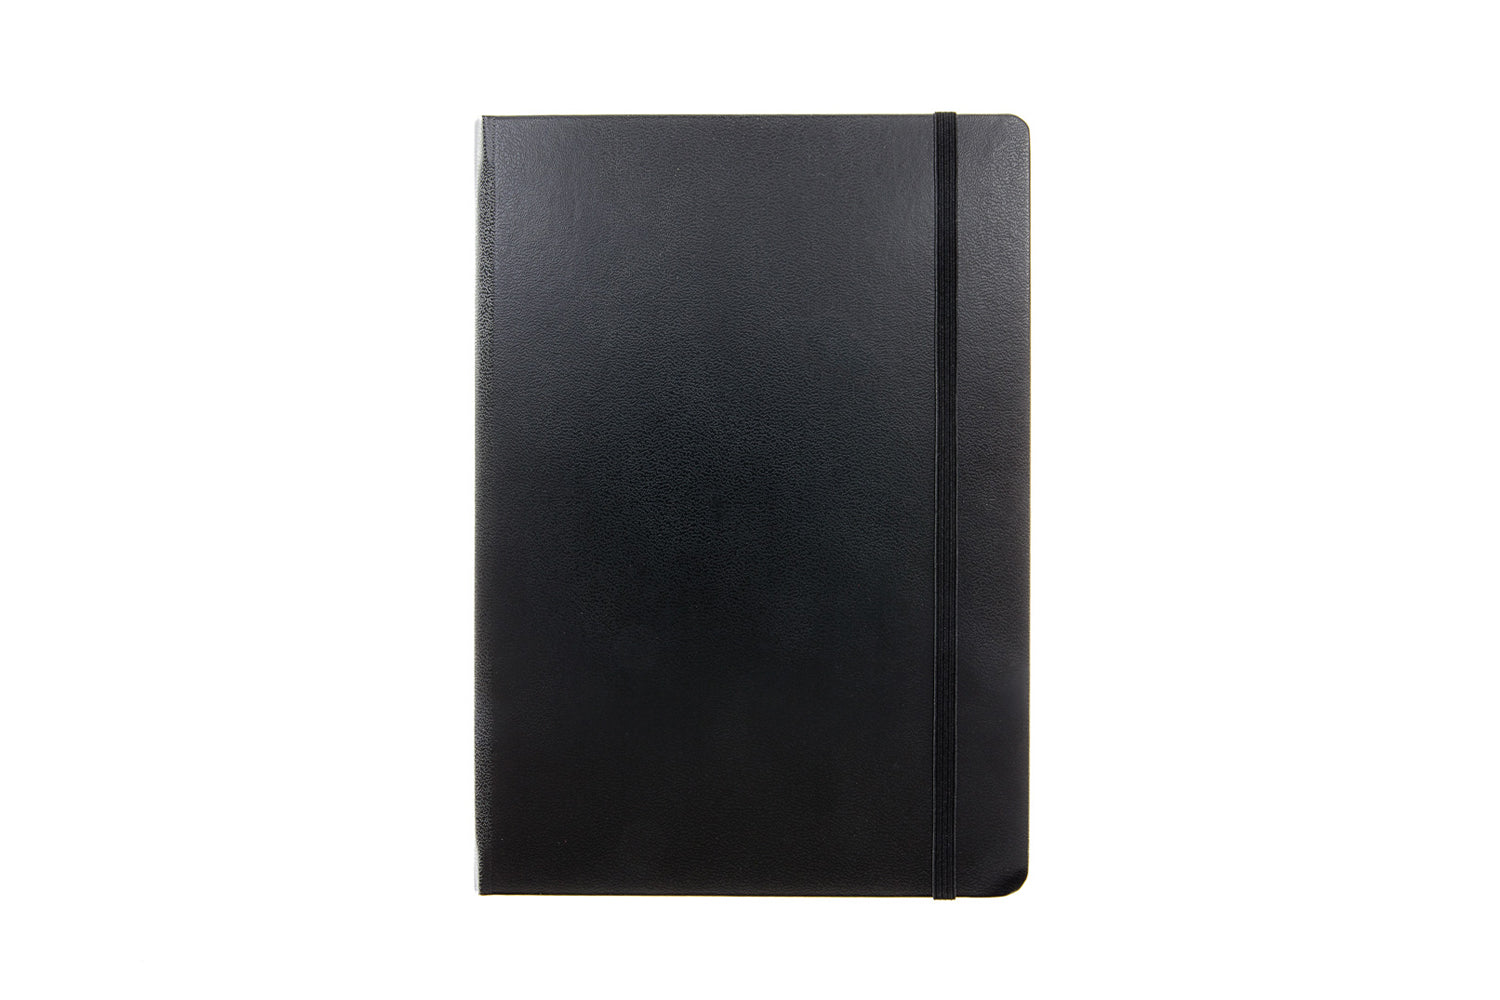 Leuchtturm1917 Medium A5 Hardcover Notebook Dotted Black – Reid Stationers